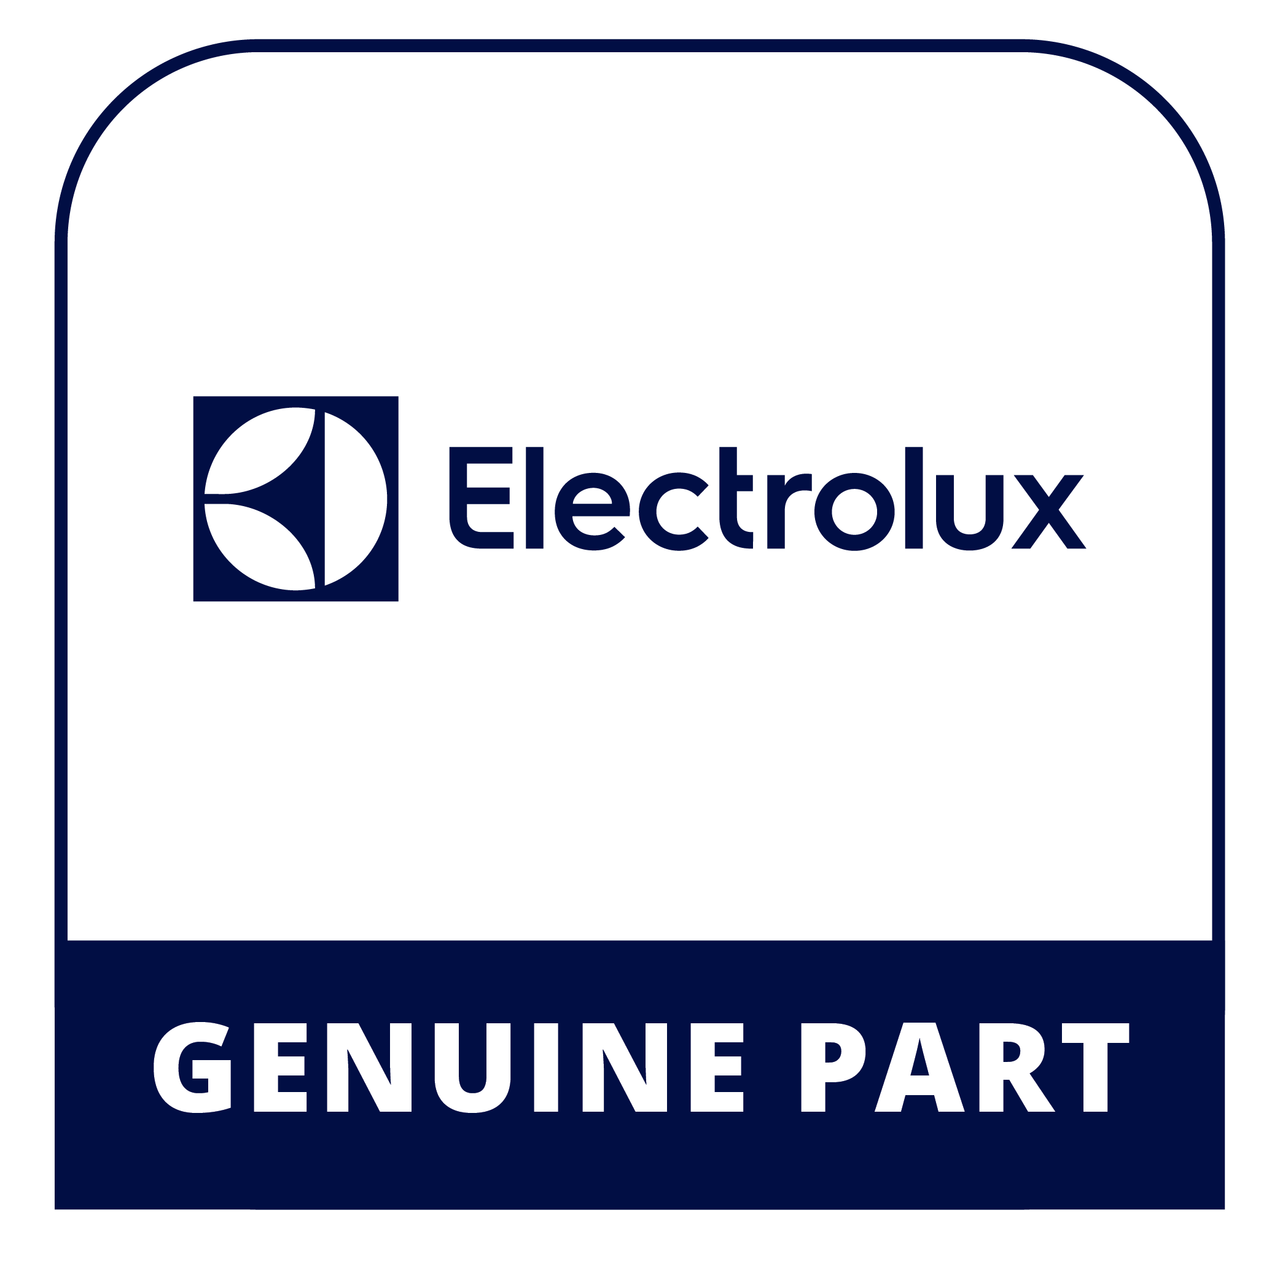 Frigidaire - Electrolux 316237702 Ignitor/Orifice Ass - Genuine Electrolux Part